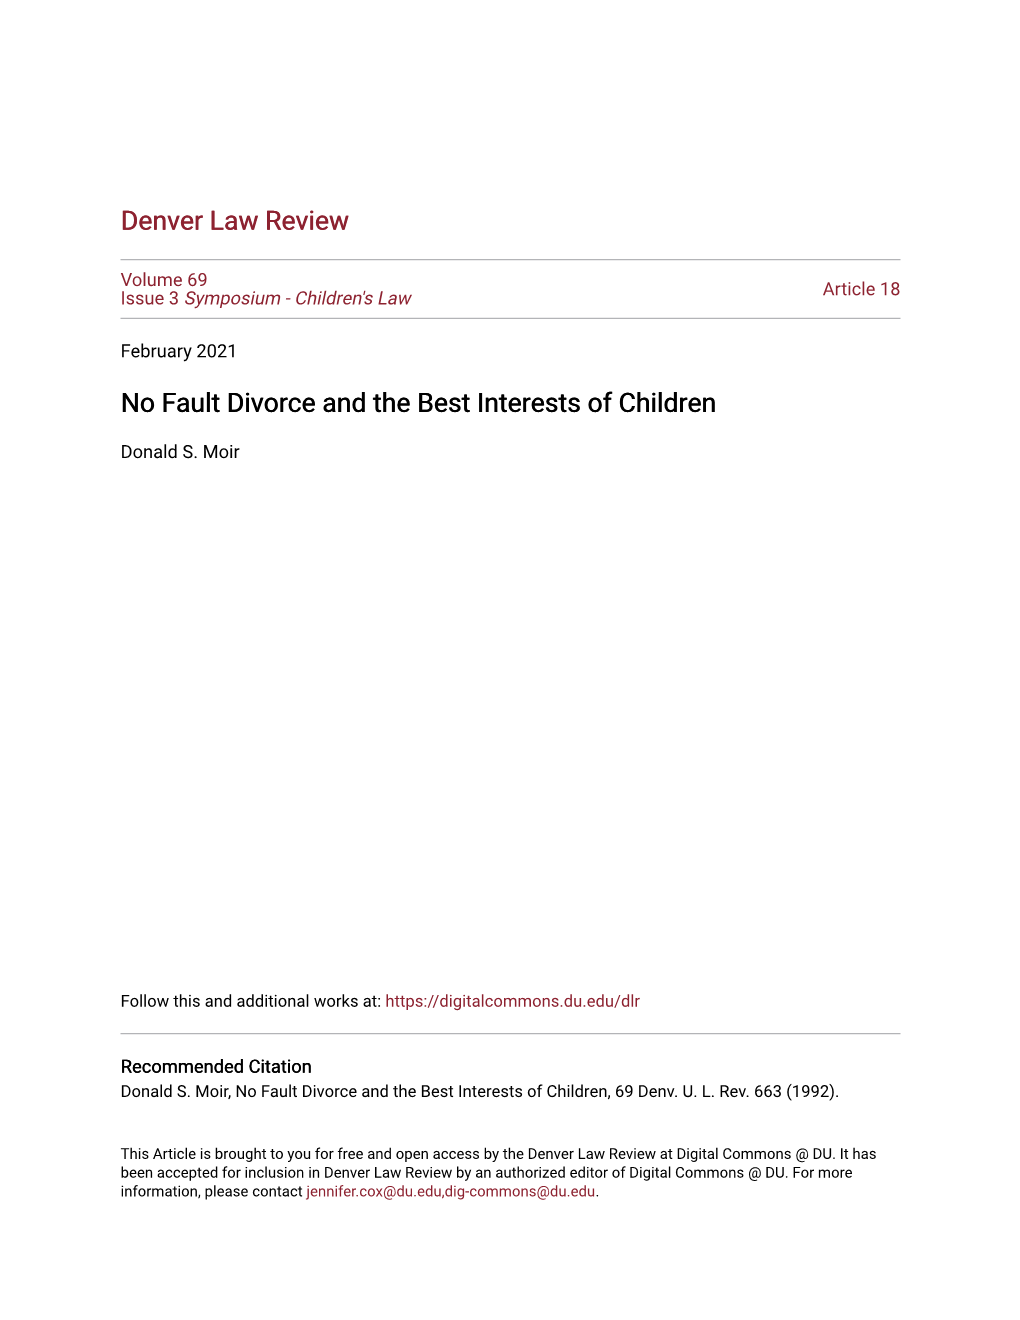 No Fault Divorce and the Best Interests of Children